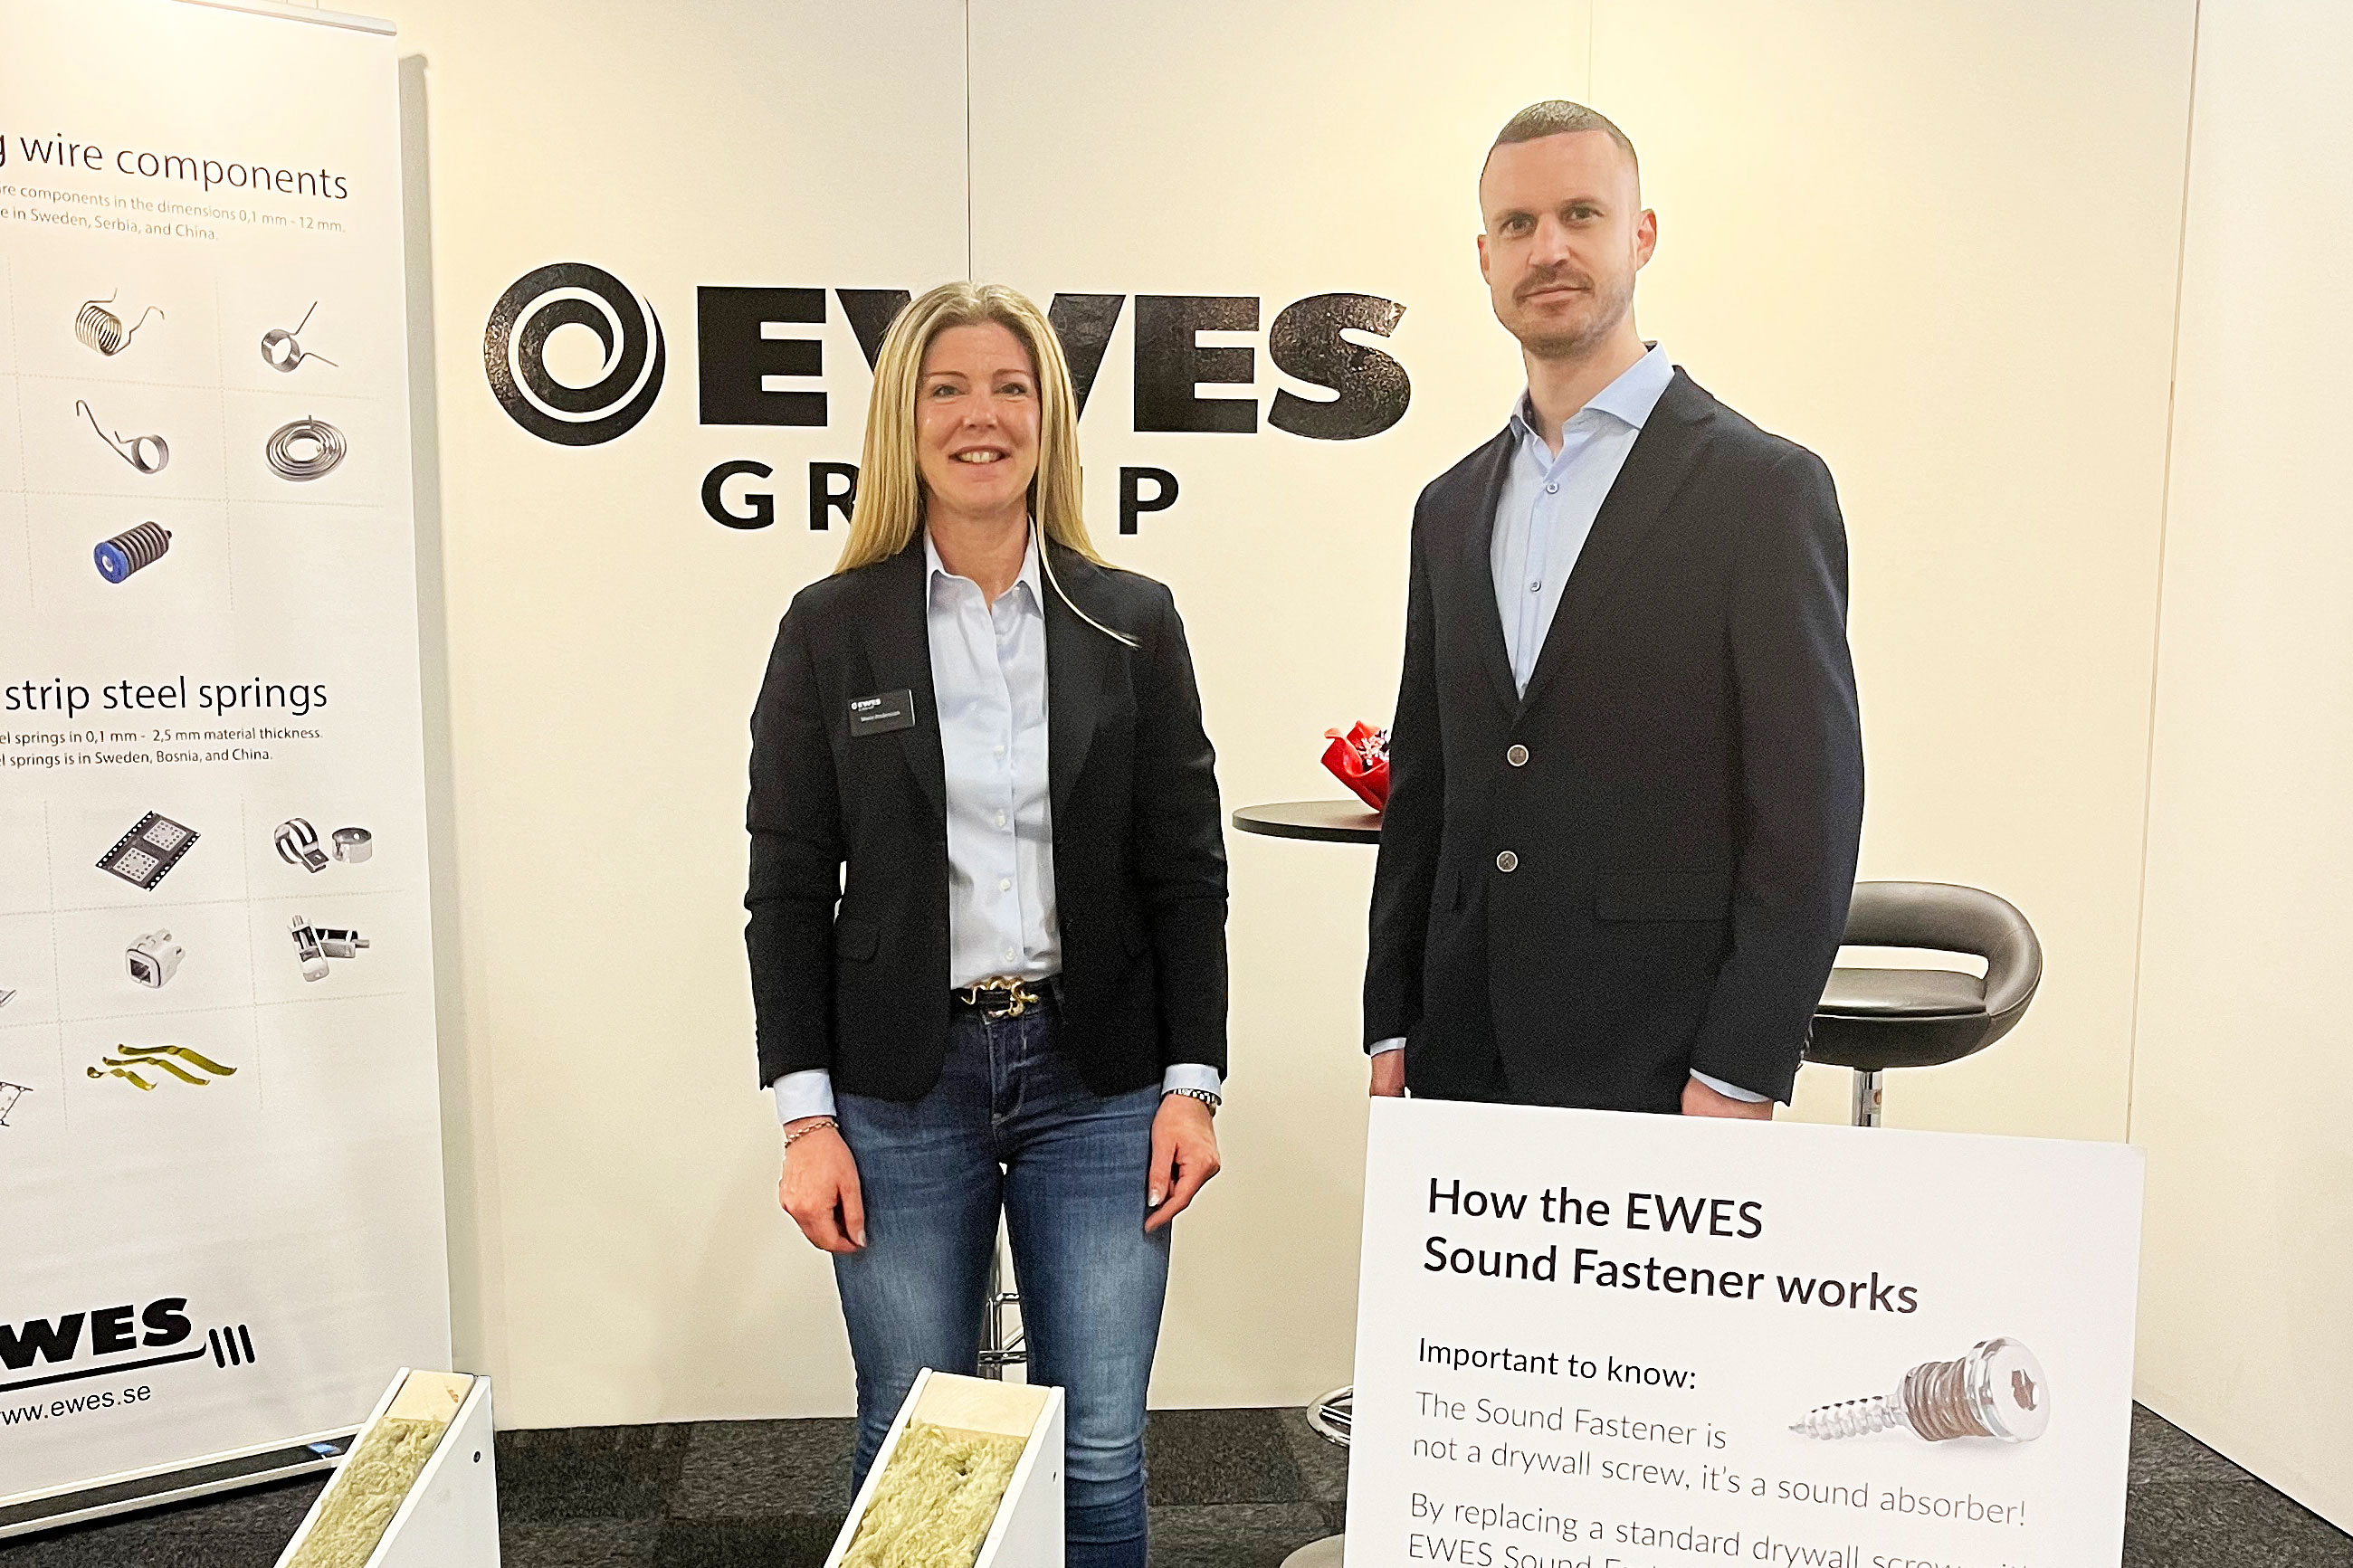 Maria Andersson, marknadschef, och Nikola Tosic, säljare på EWES AB